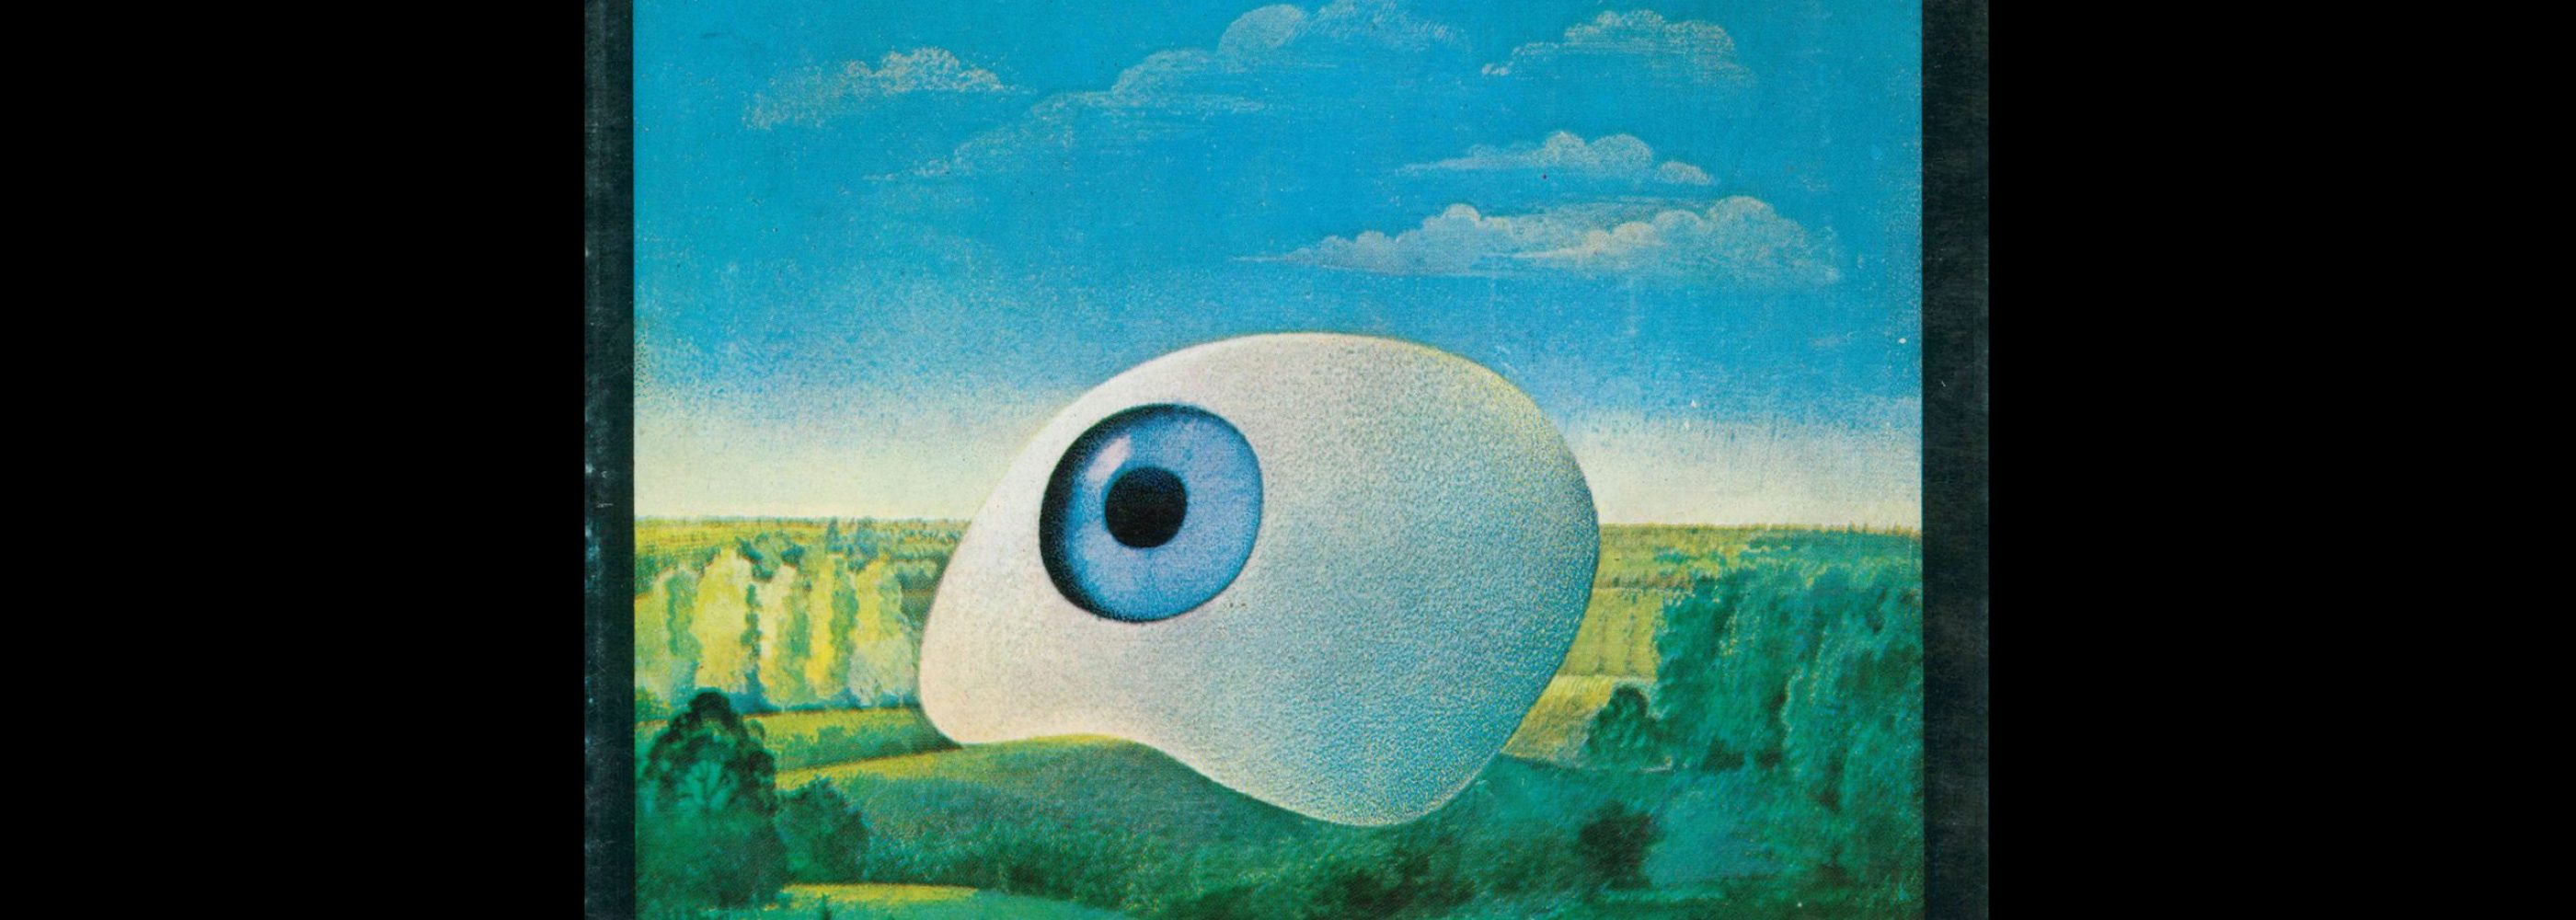 Projekt 95, 4, 1973. Cover design by Janusz Stanny